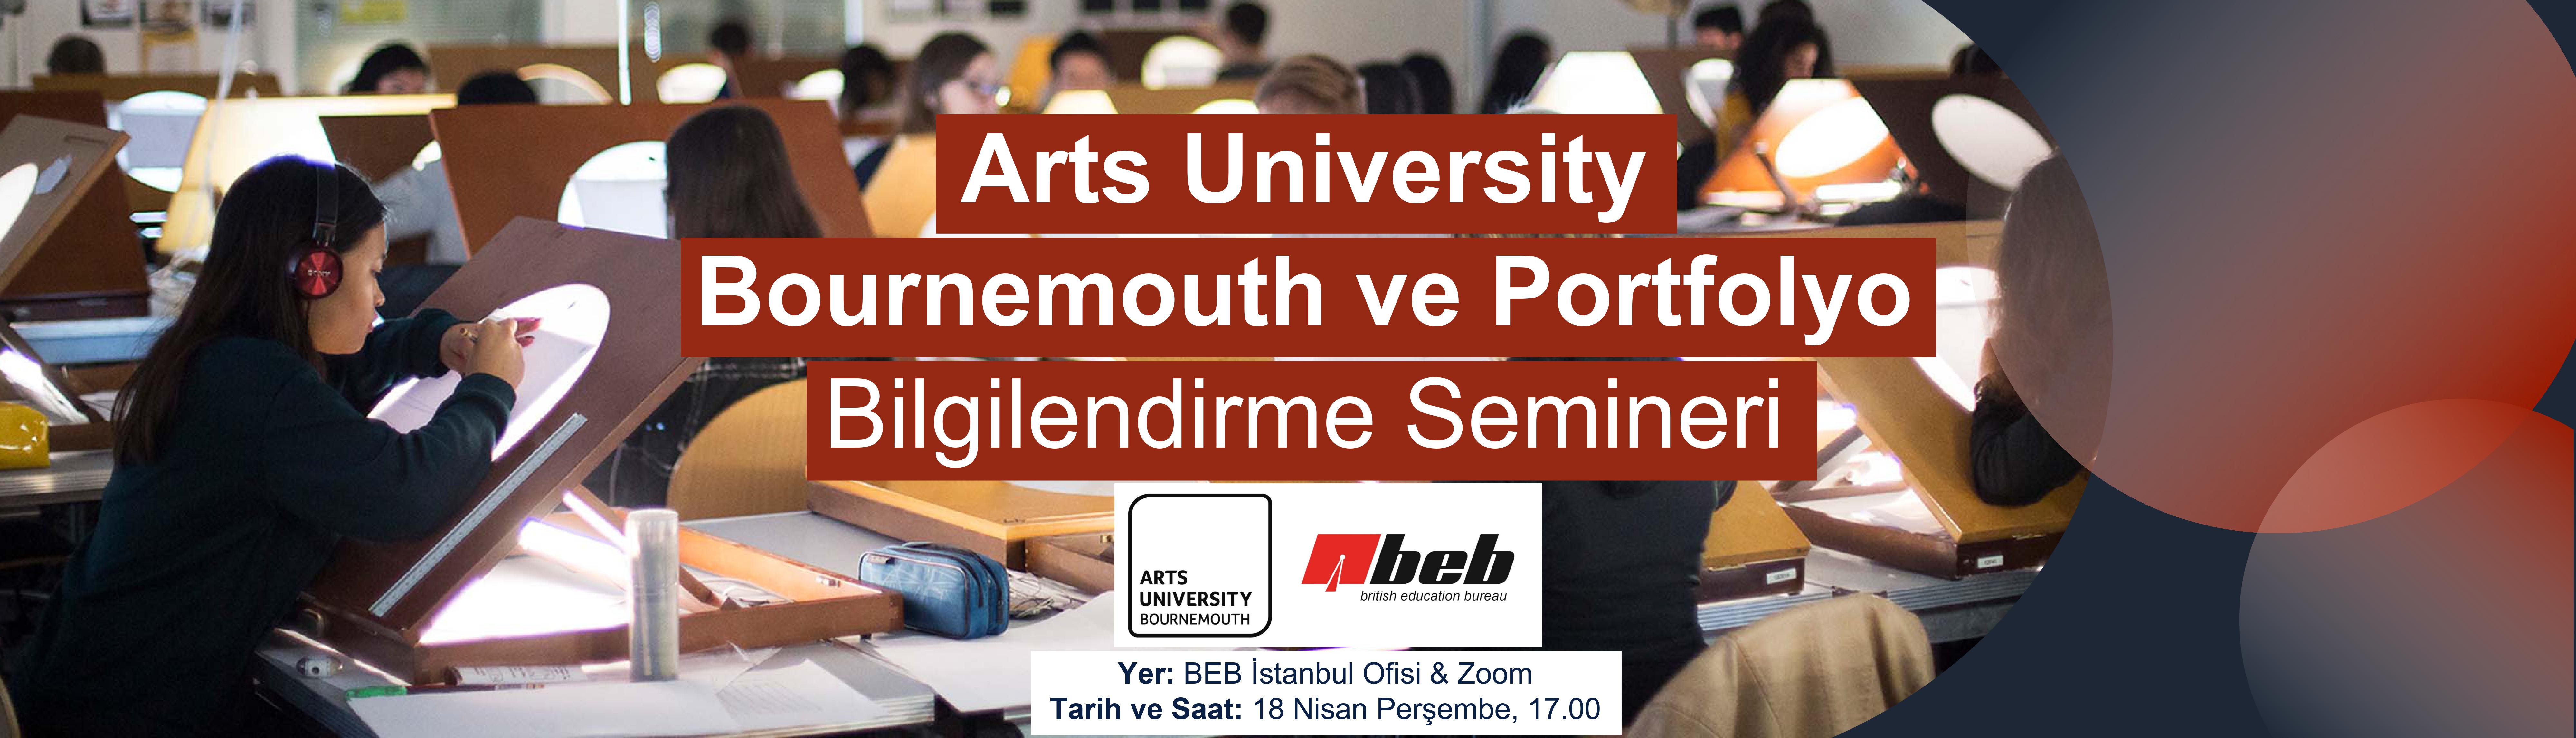 BEB--Arts-University-Bournemouth-ve-Portfolyo-Bilgilendirme-Semineri